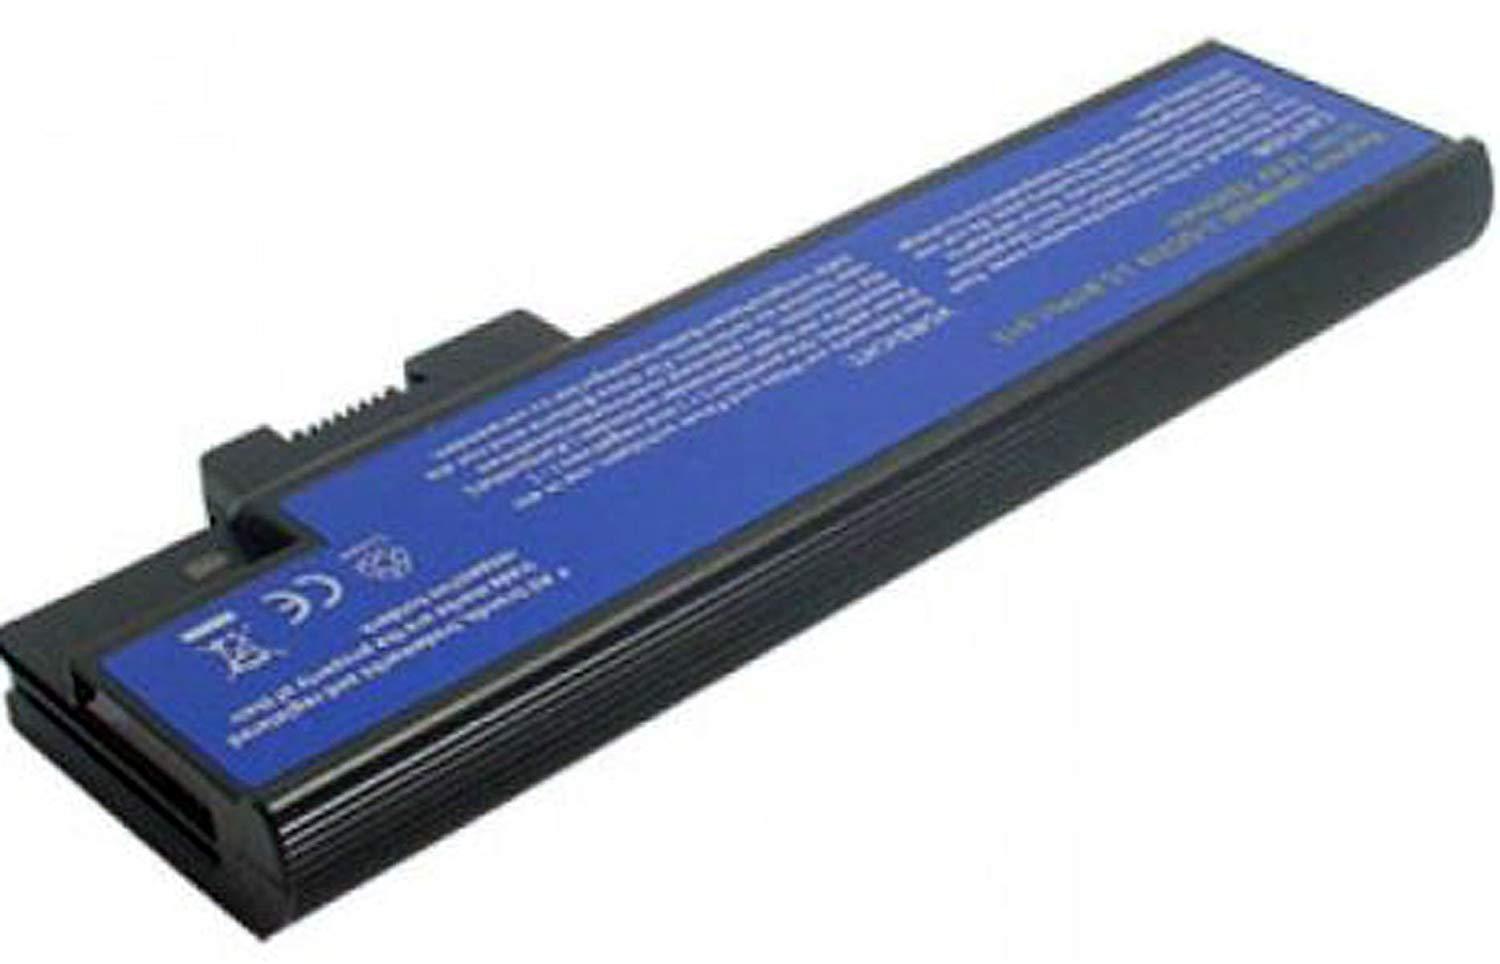 Original Acer Aspire 3660 5670 7110 7230 9300 9400 laptop battery (4400 mAh) - eBuy UAE